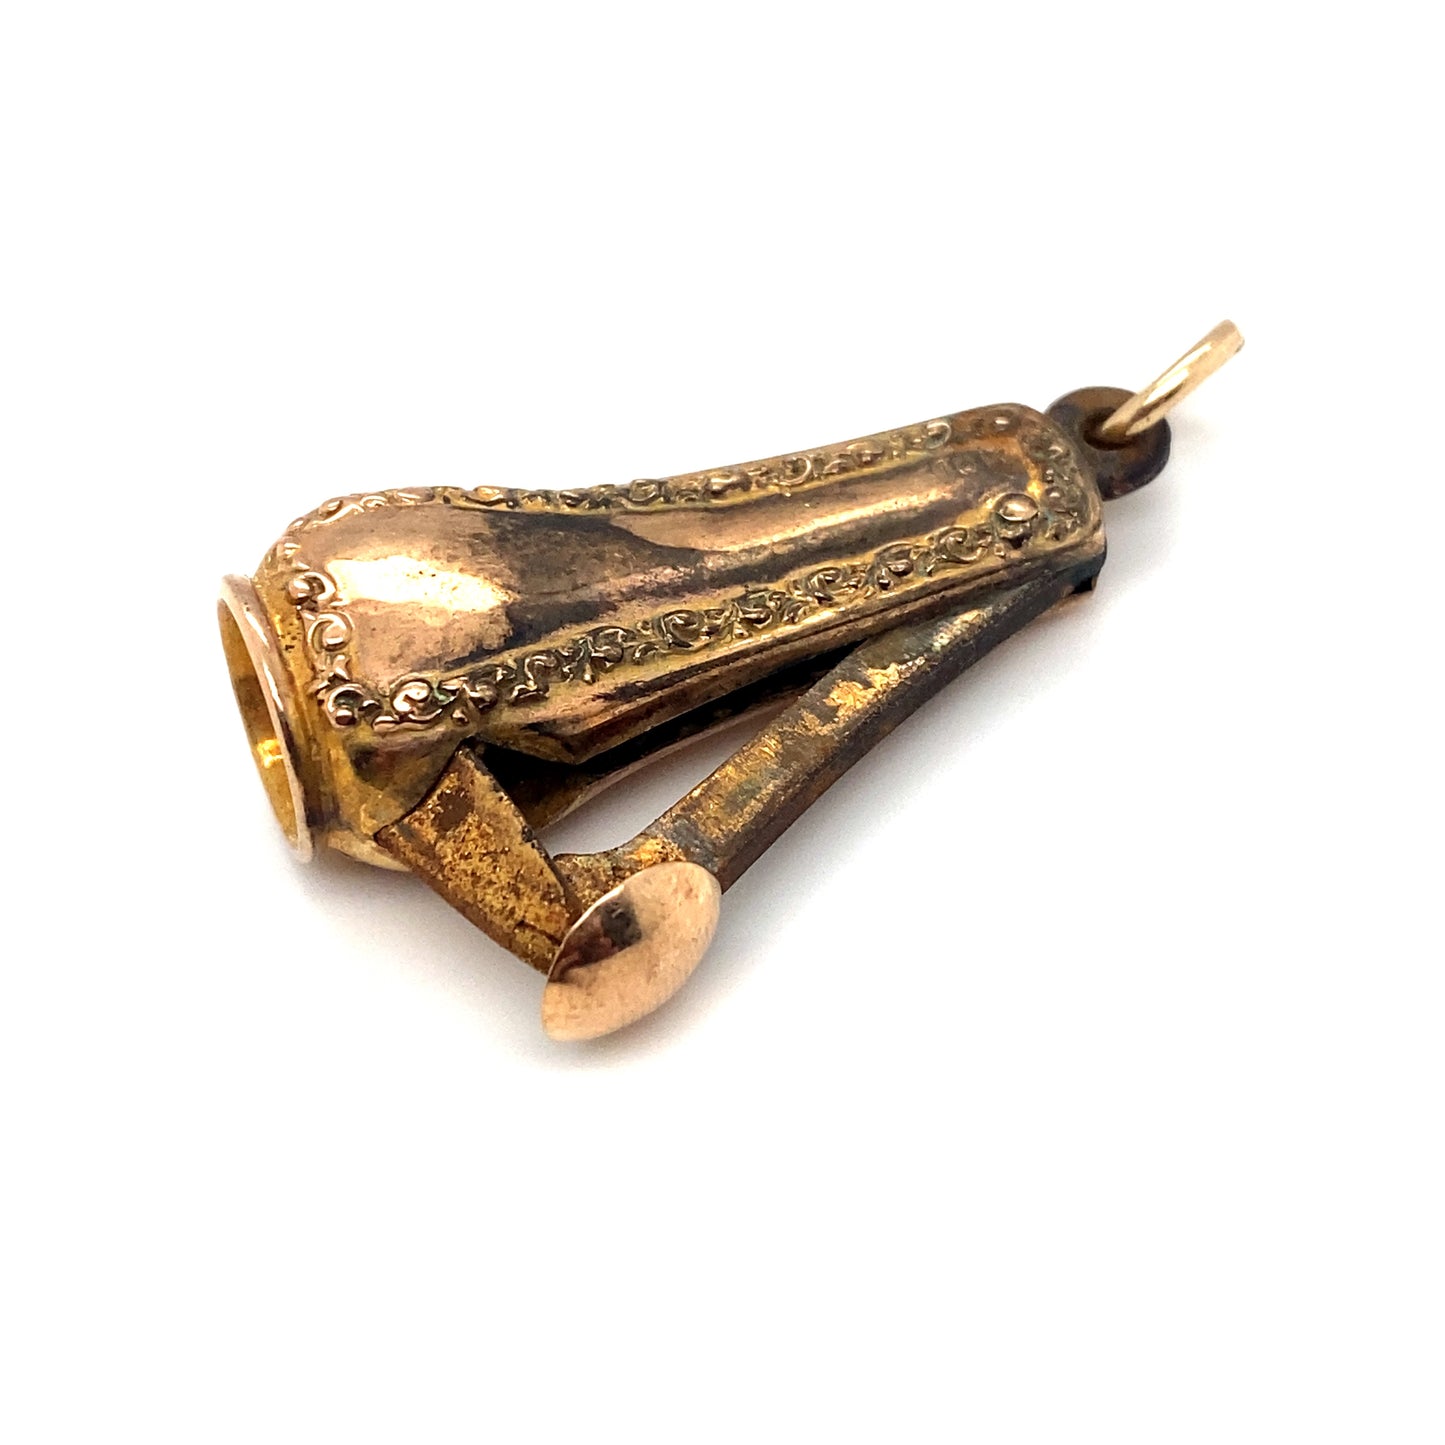 Circa 1890s Monogrammed HR Cigar Cutter Charm in 10K Gold